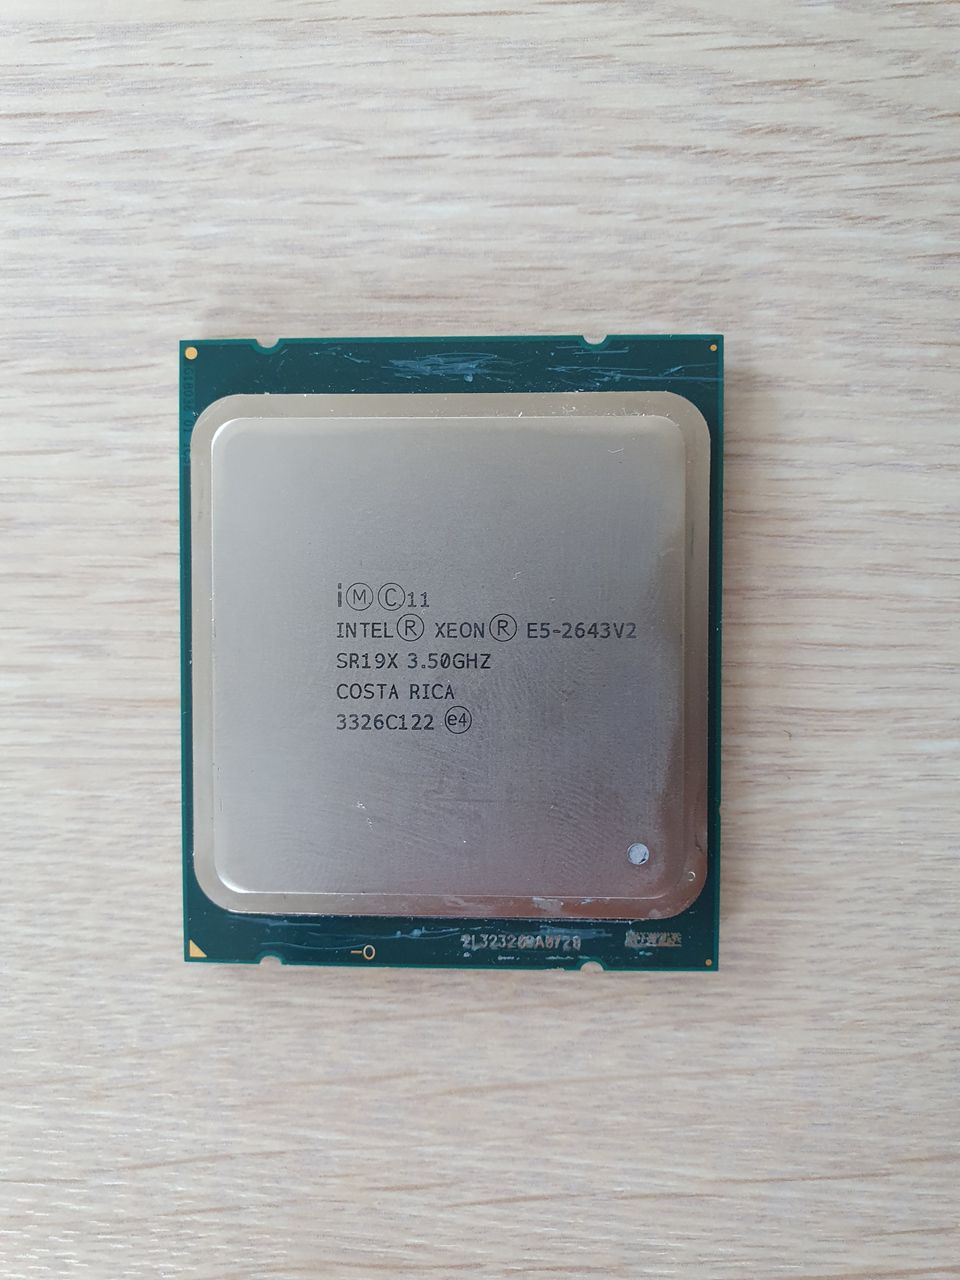 Intel Xeon E5-2643v2